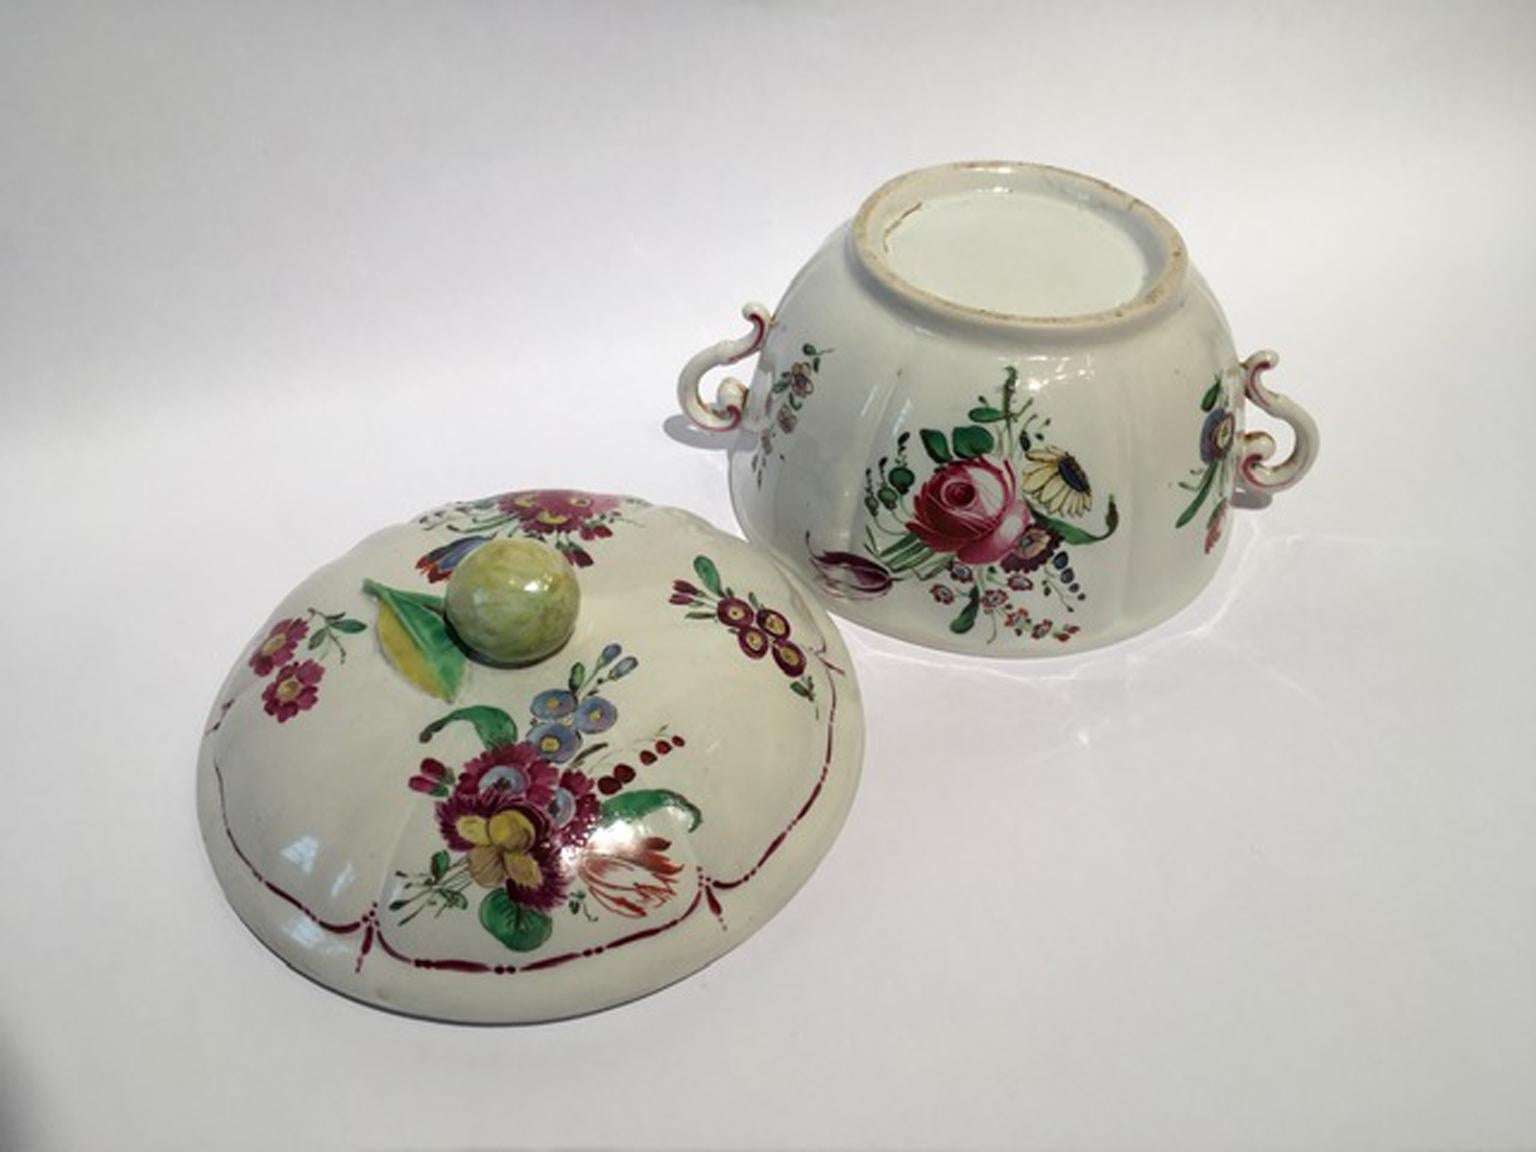 Italian Italy 18th Century Richard Ginori Porcelain Sugar Bowl with Floral Drawings